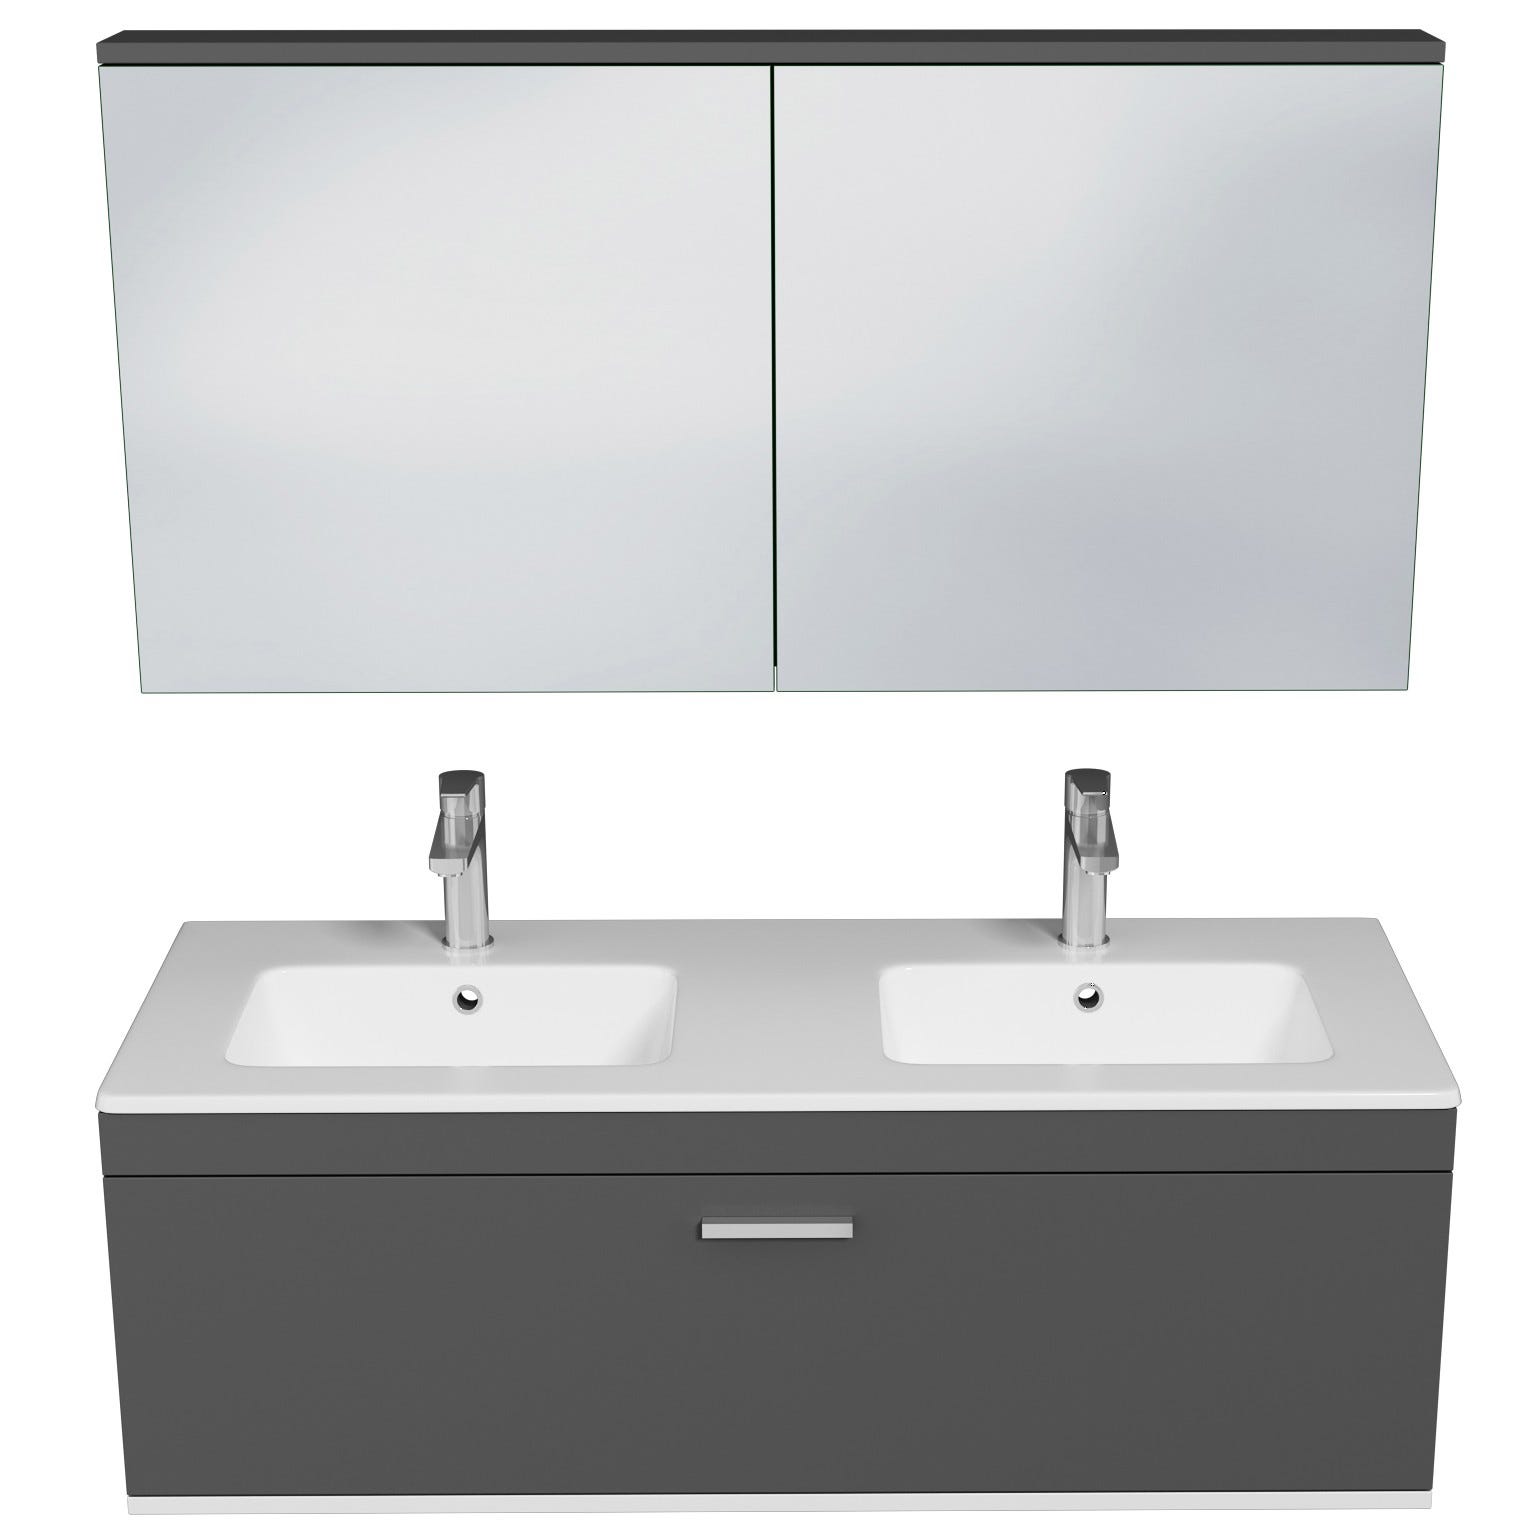 RUBITE Meuble salle de bain double vasque 1 tiroir gris anthracite largeur 120 cm + miroir armoire 3